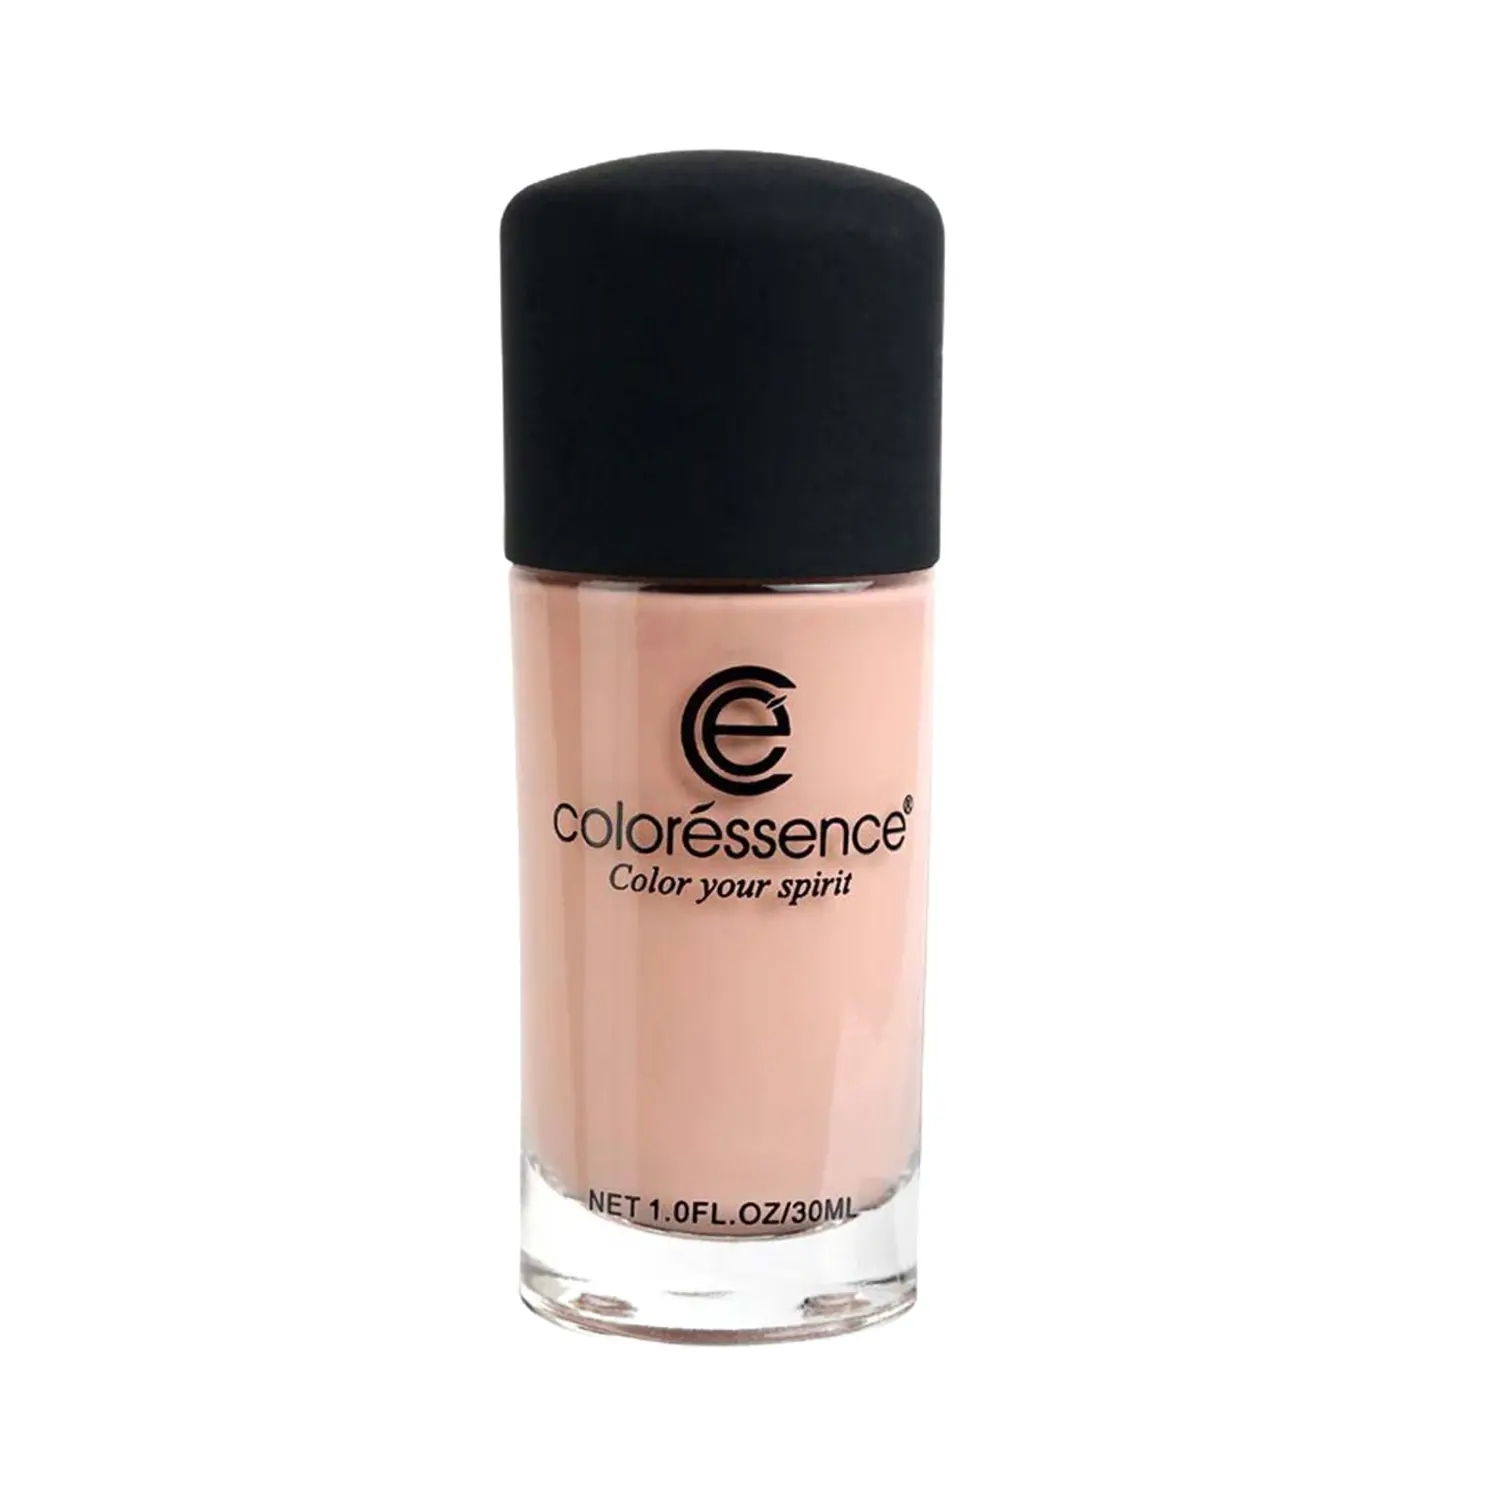 Coloressence | Coloressence Liquid Foundation, Deep Coverage Lightweight Formula - Pink Beige (30ml)